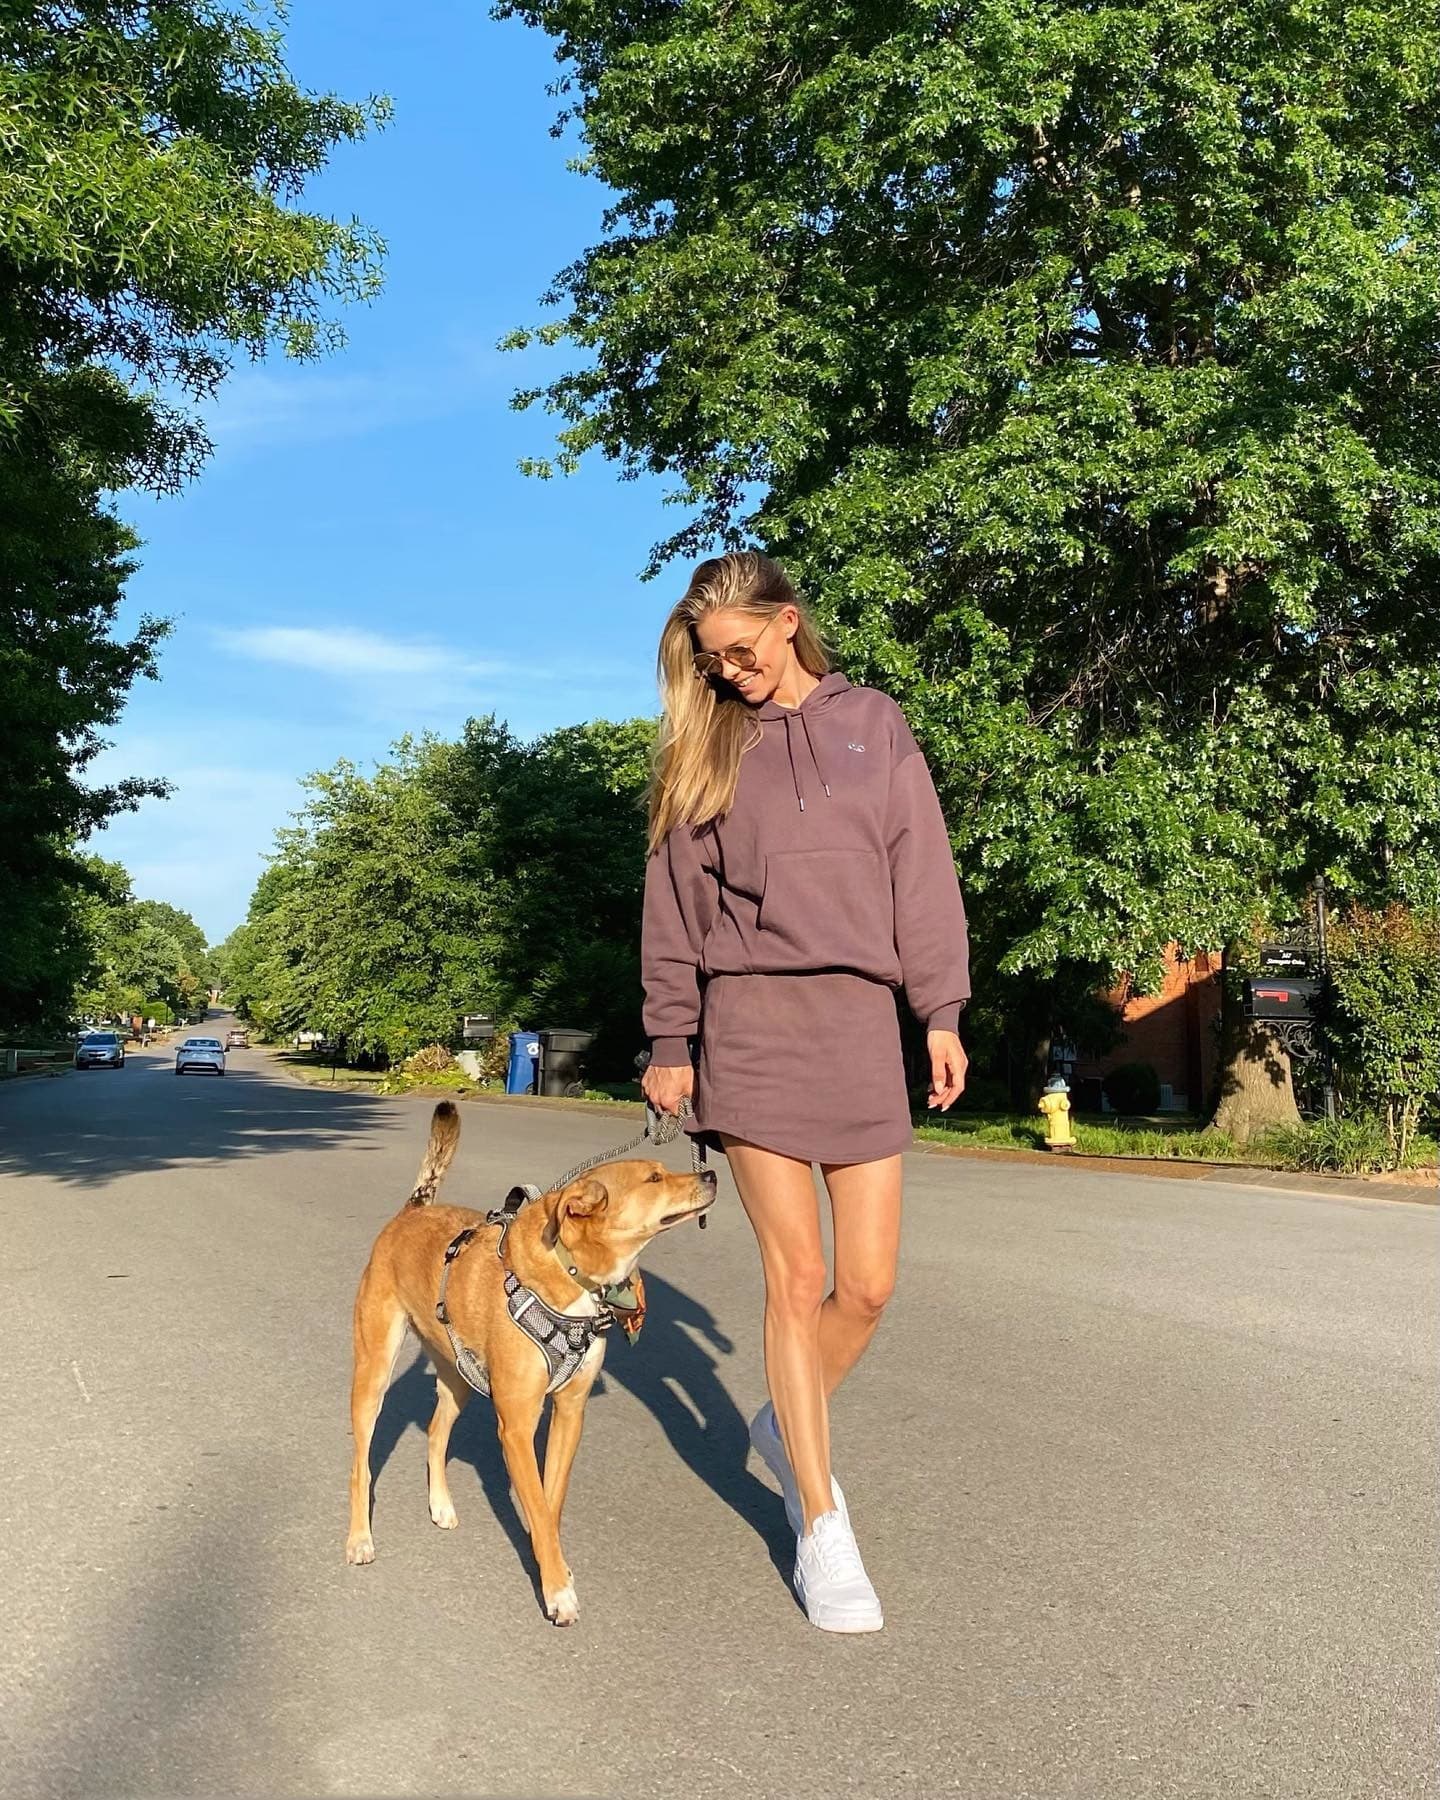 @danielleknudson1 לובשת חצאית זיעה חומה עם סווטשירט קפוצ'ון תואם בזמן שהיא מטיילת עם הכלב שלה ברחוב שלאורכו עצים ירוקים גדולים.